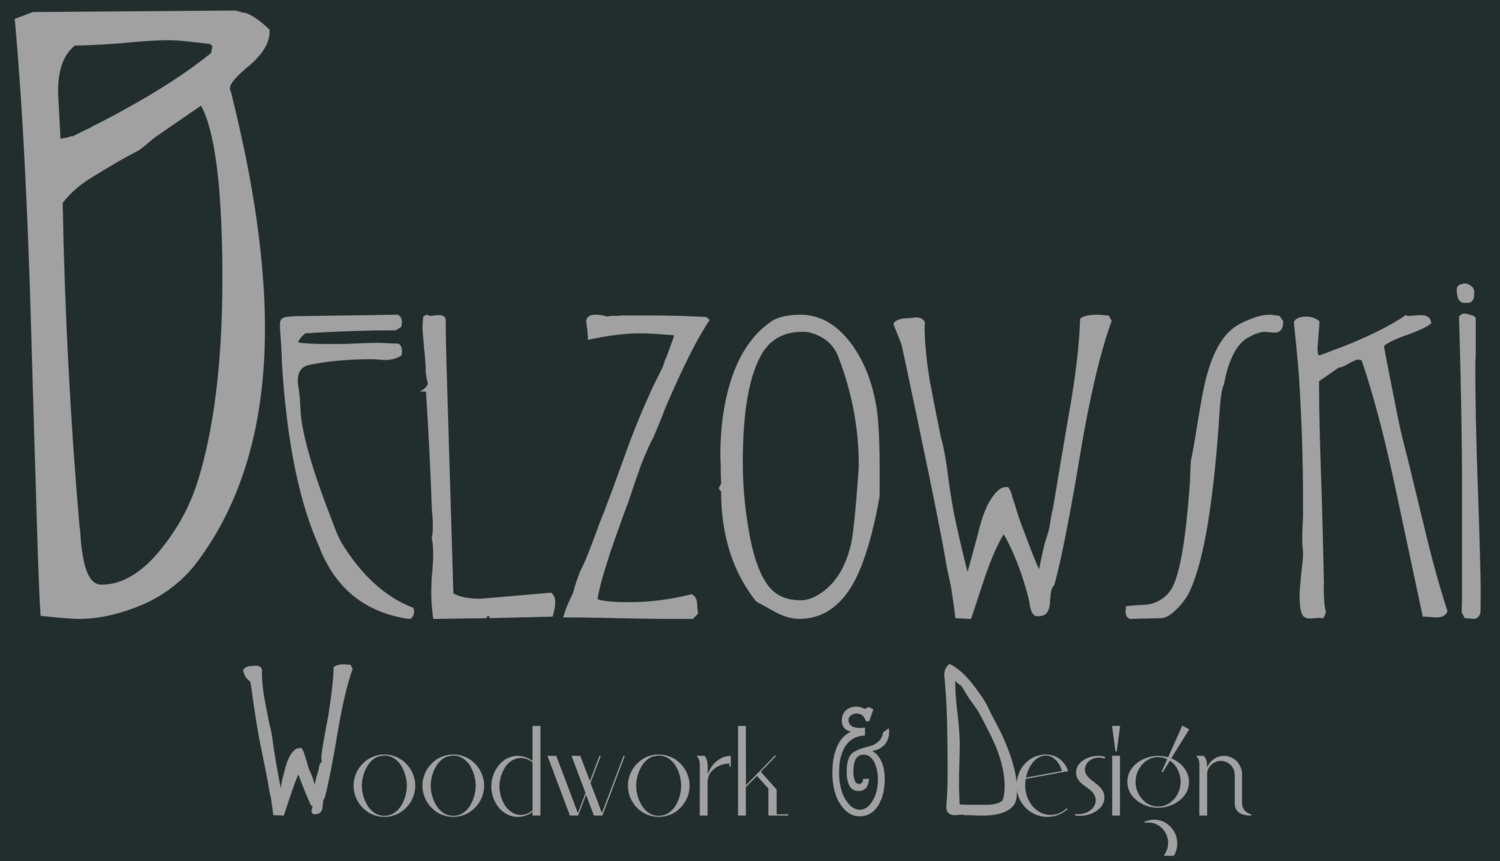 Belzowski Custom Carpentry